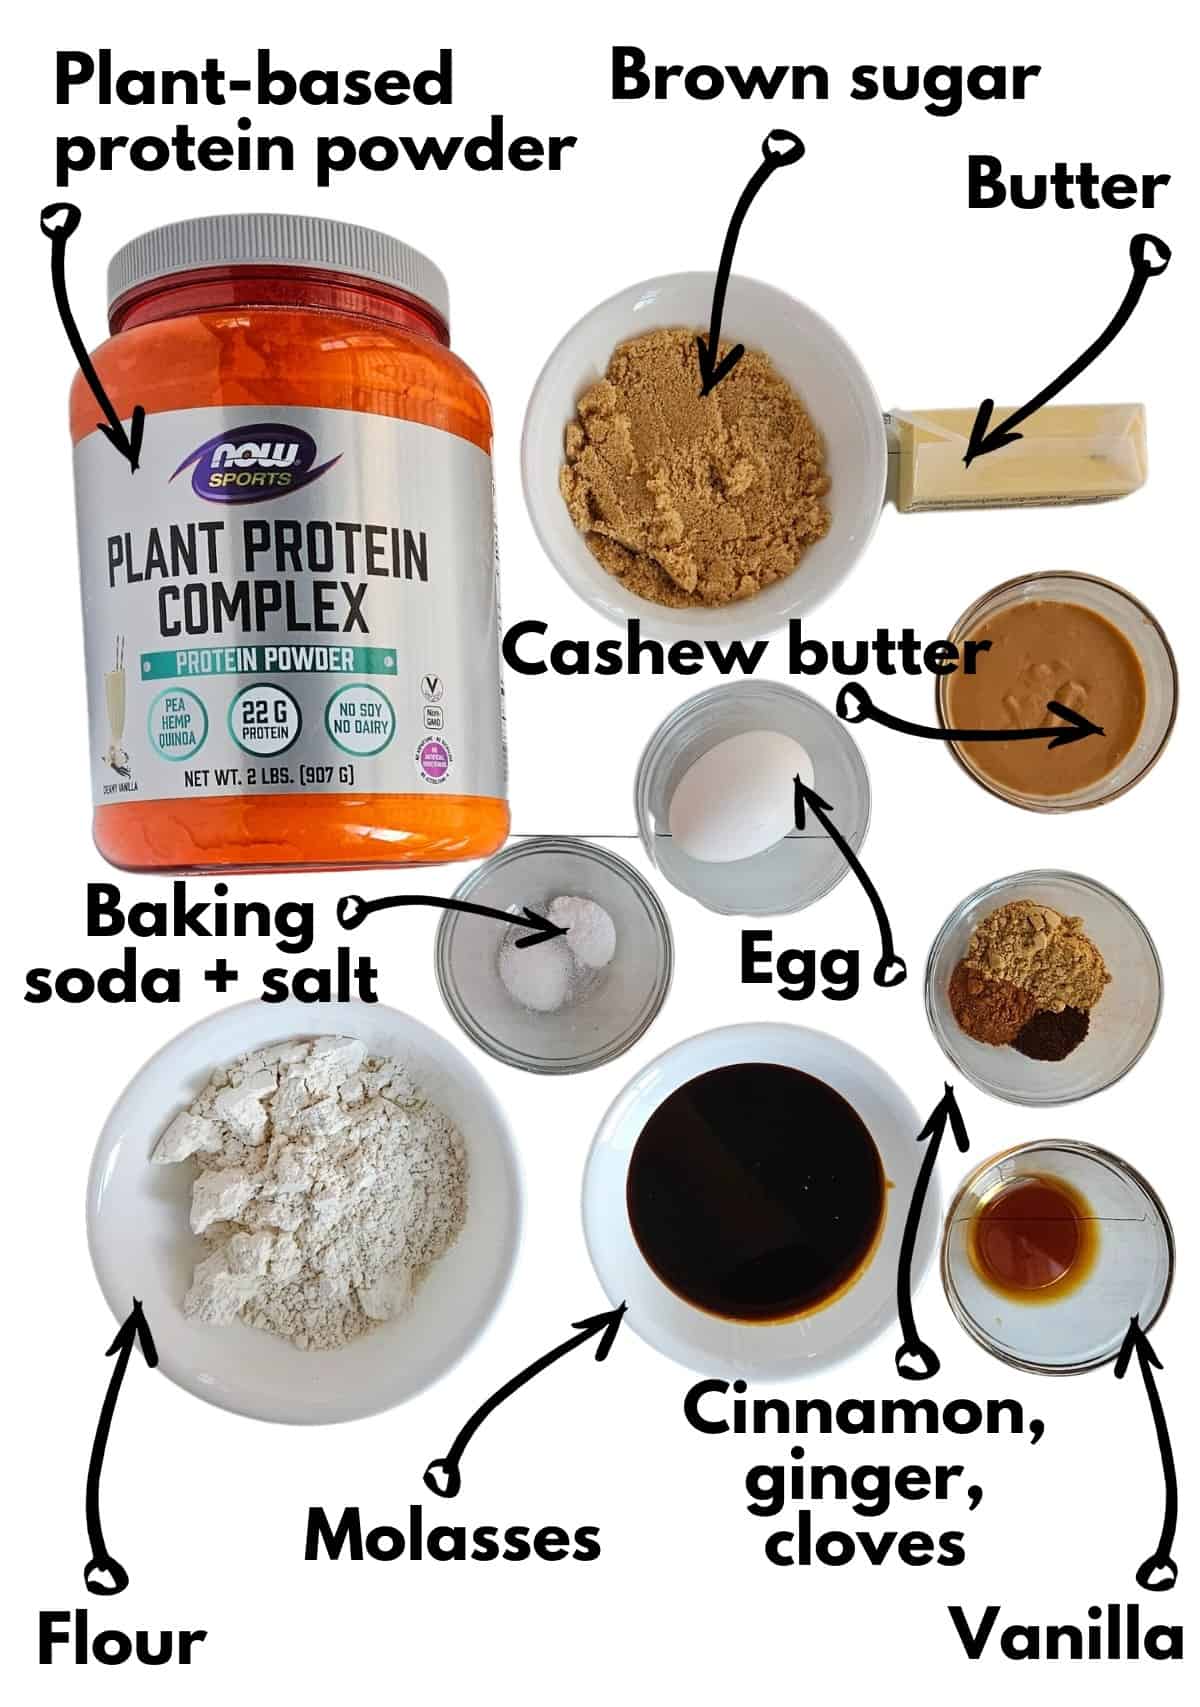 Protein powder, flour, brown sugar, butter, egg, cashew butter, baking soda, salt, molasses, cinnamon, ginger, cloves, and vanilla.